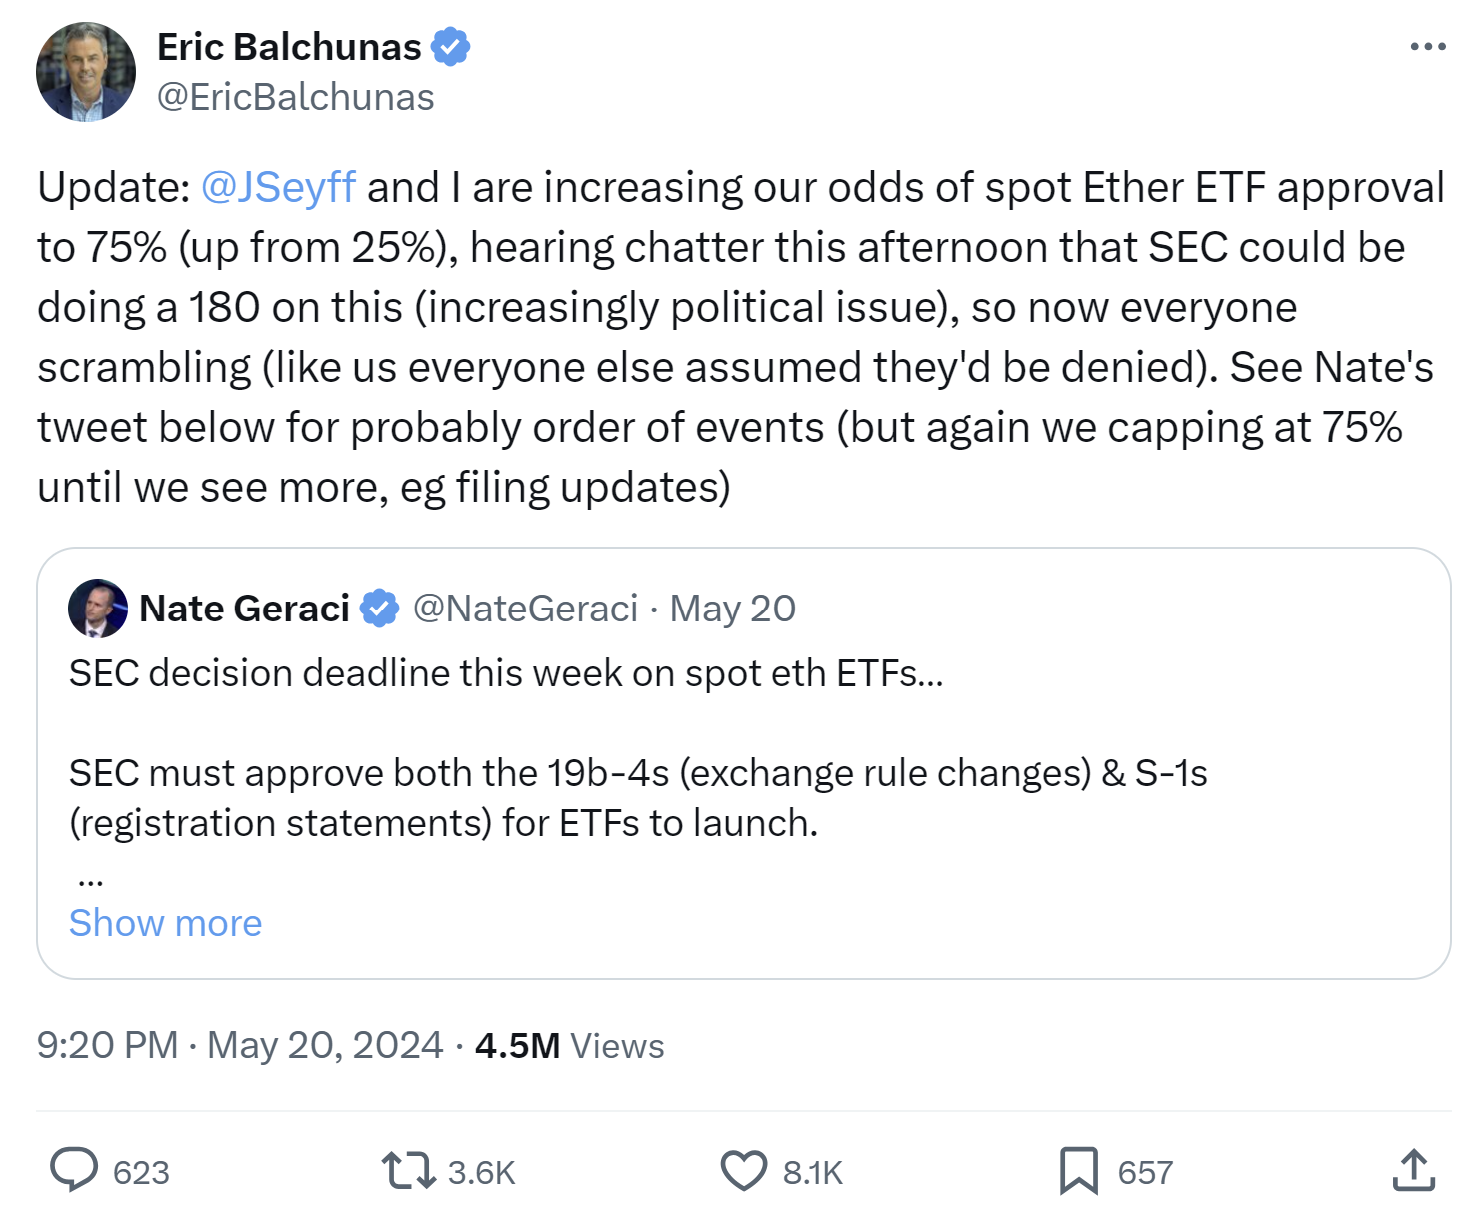 Tuit del analista de criptomonedas de Bloomberg Eric Balchunas